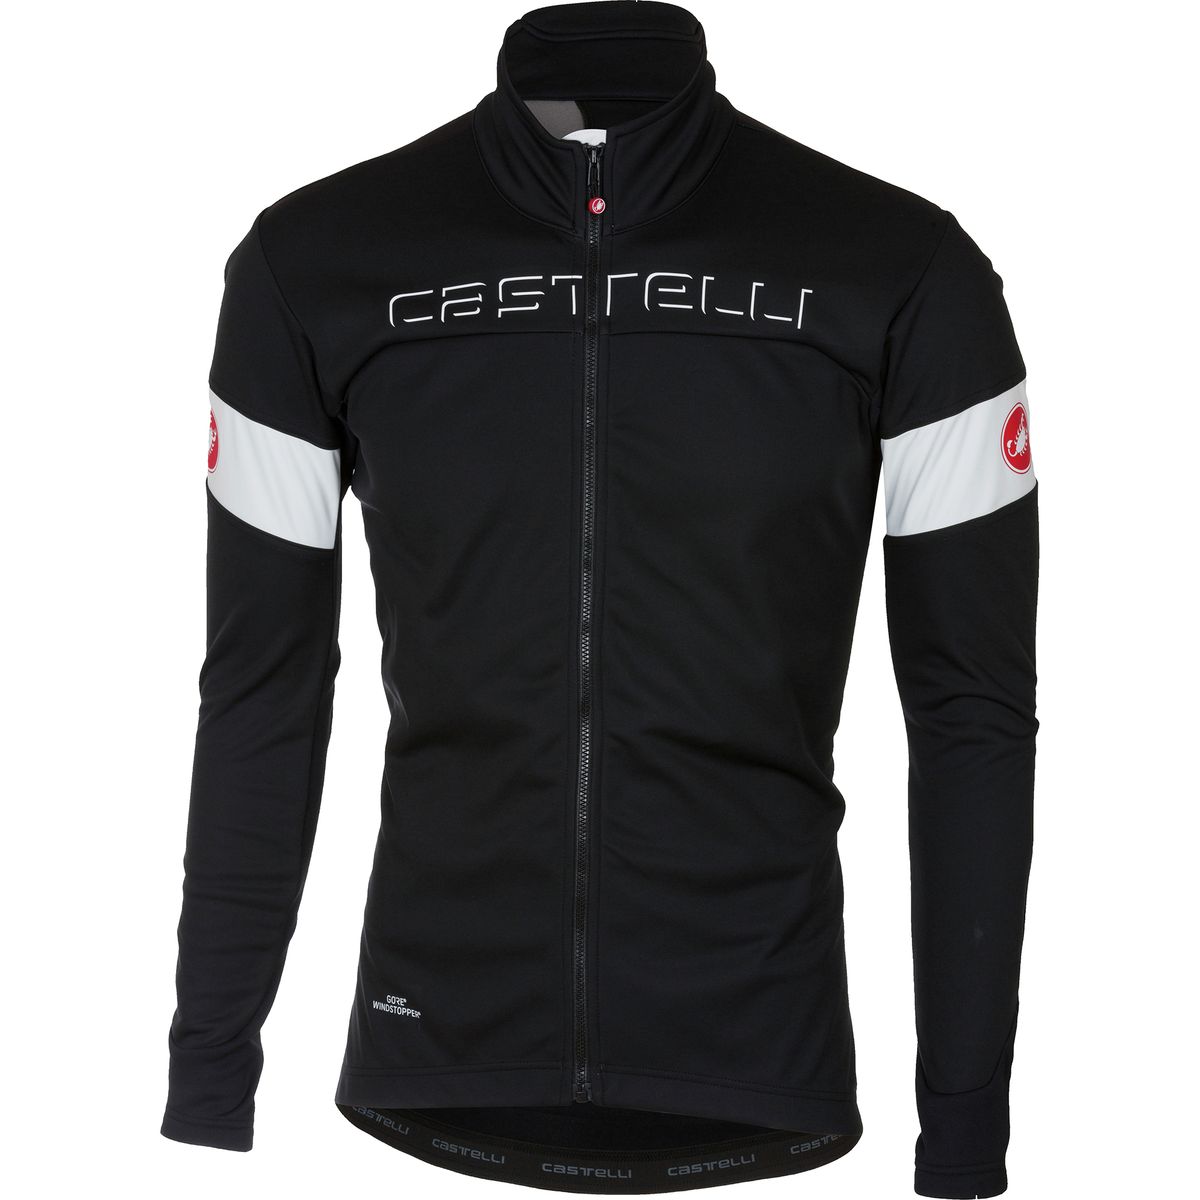 Castelli Transition Jacket - Men's